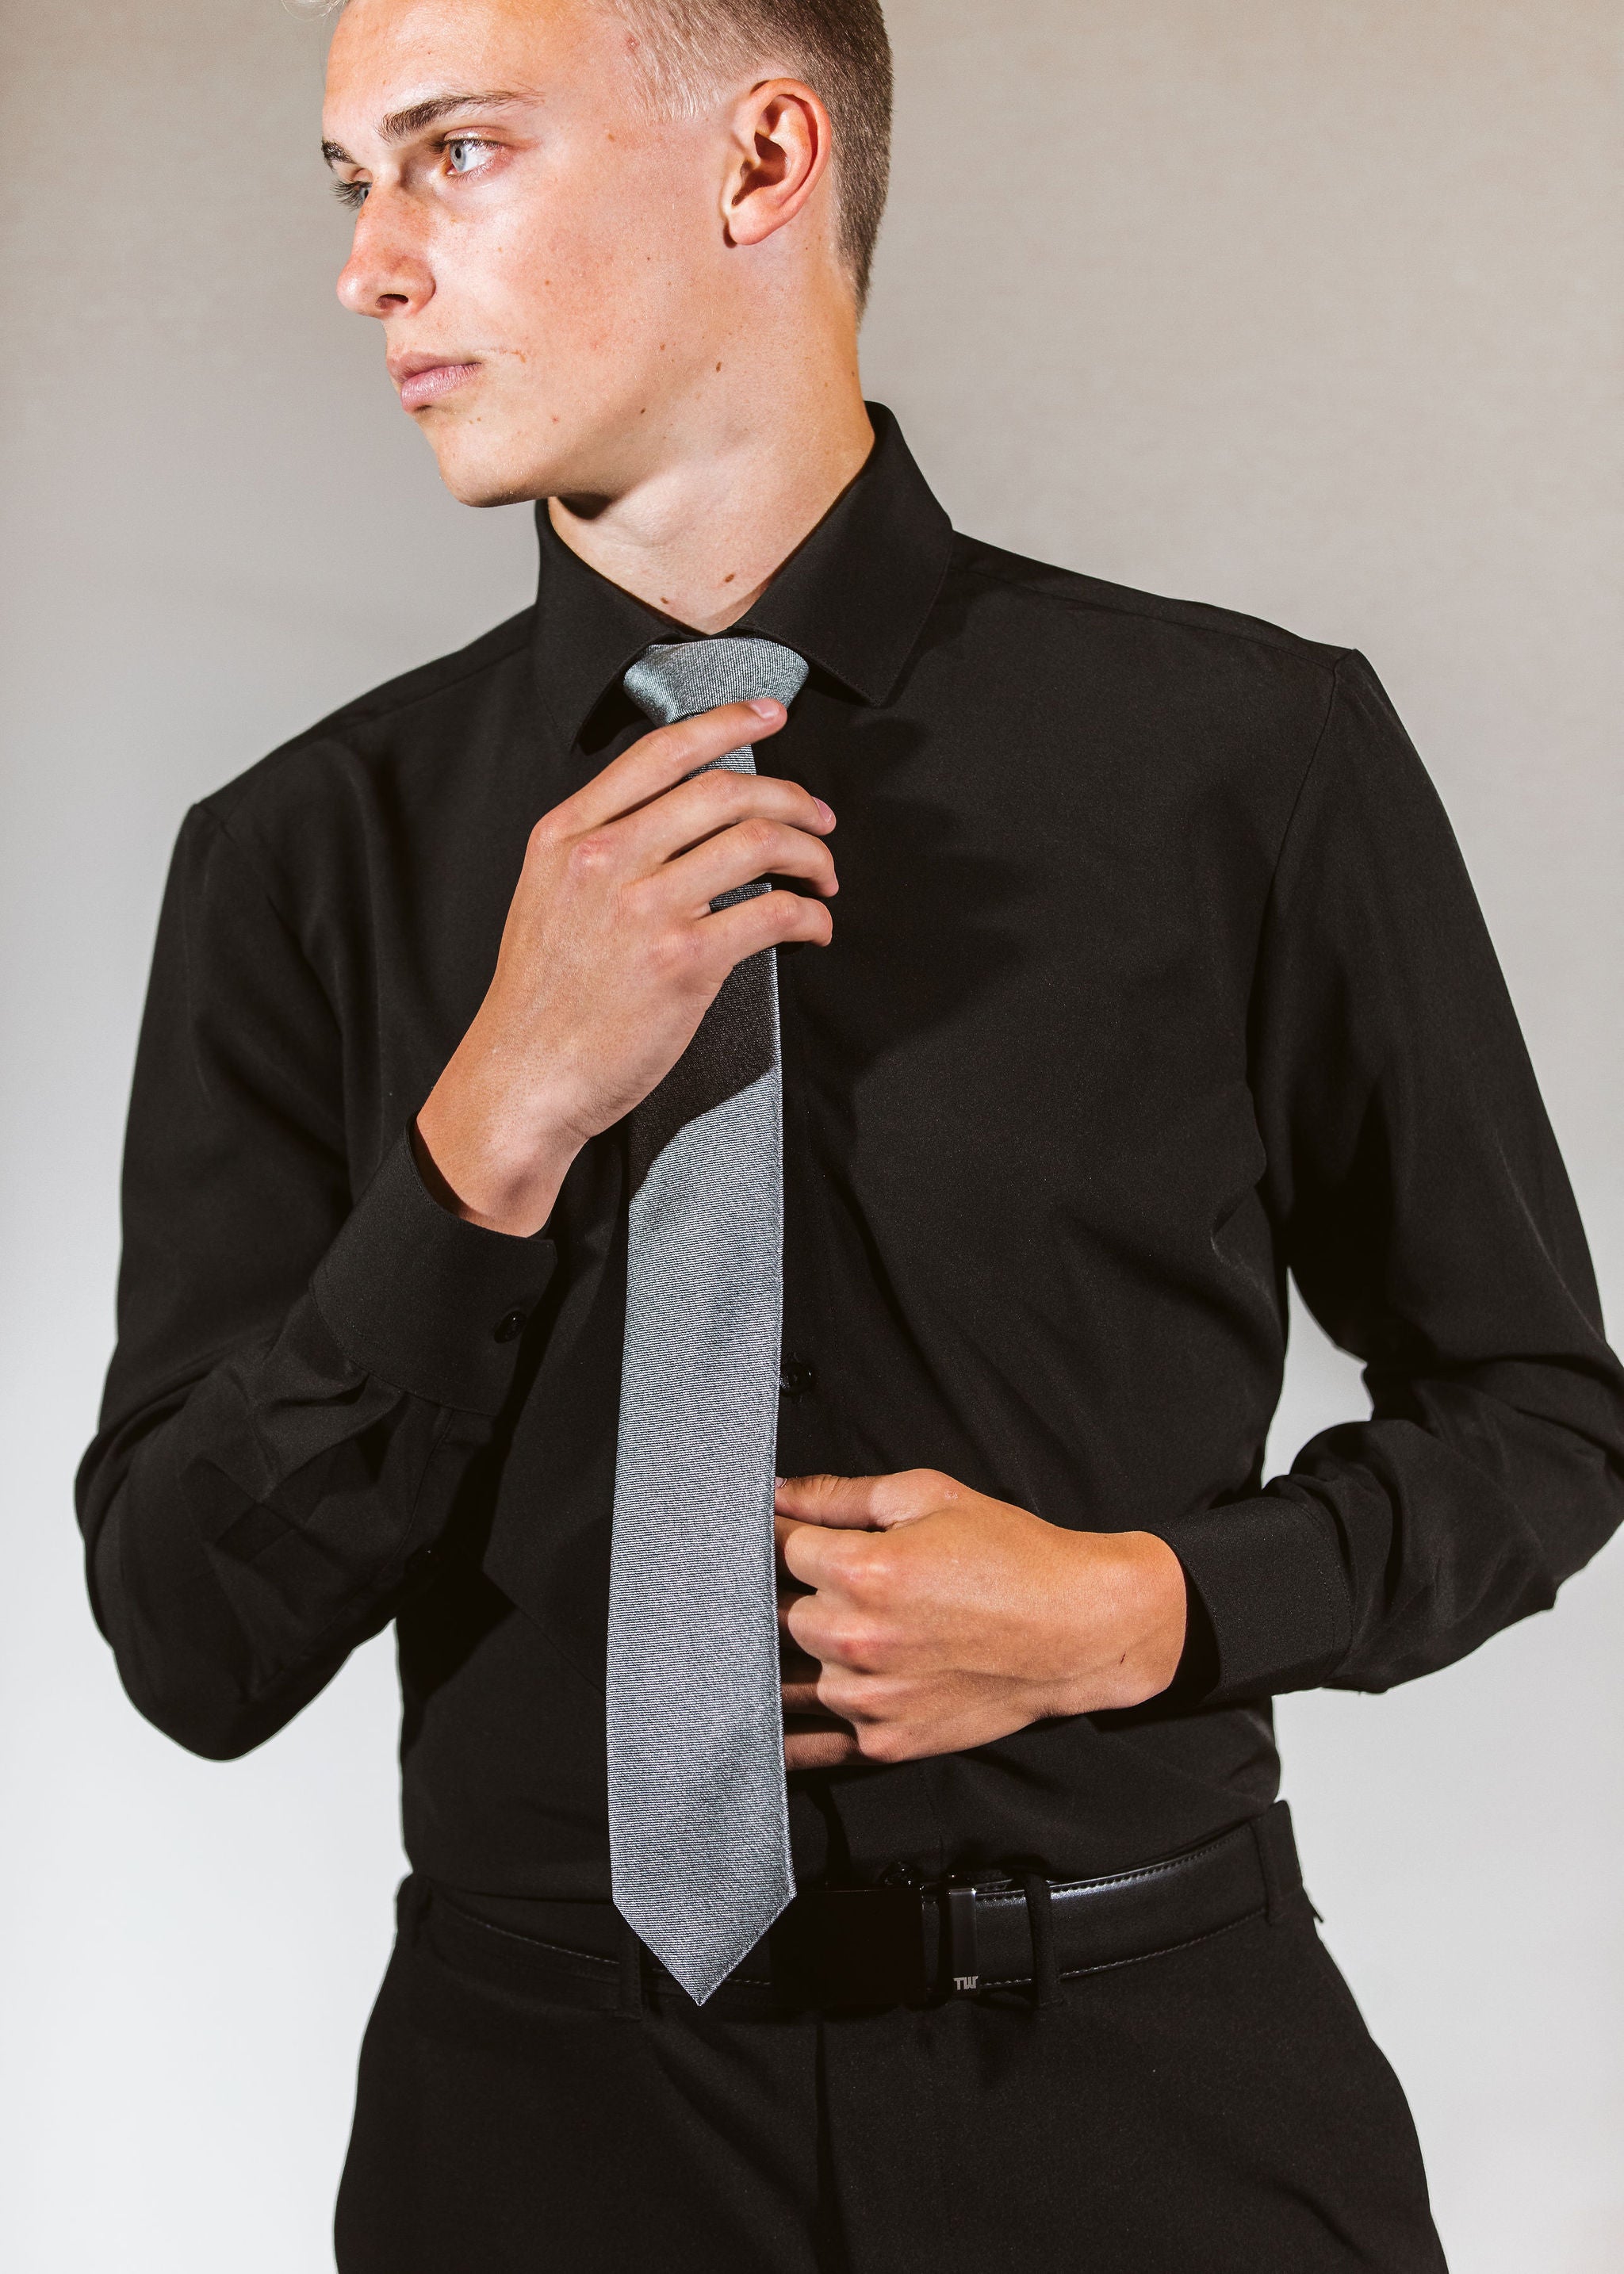 How do I avoid ruining the collar on a men's dress shirt?